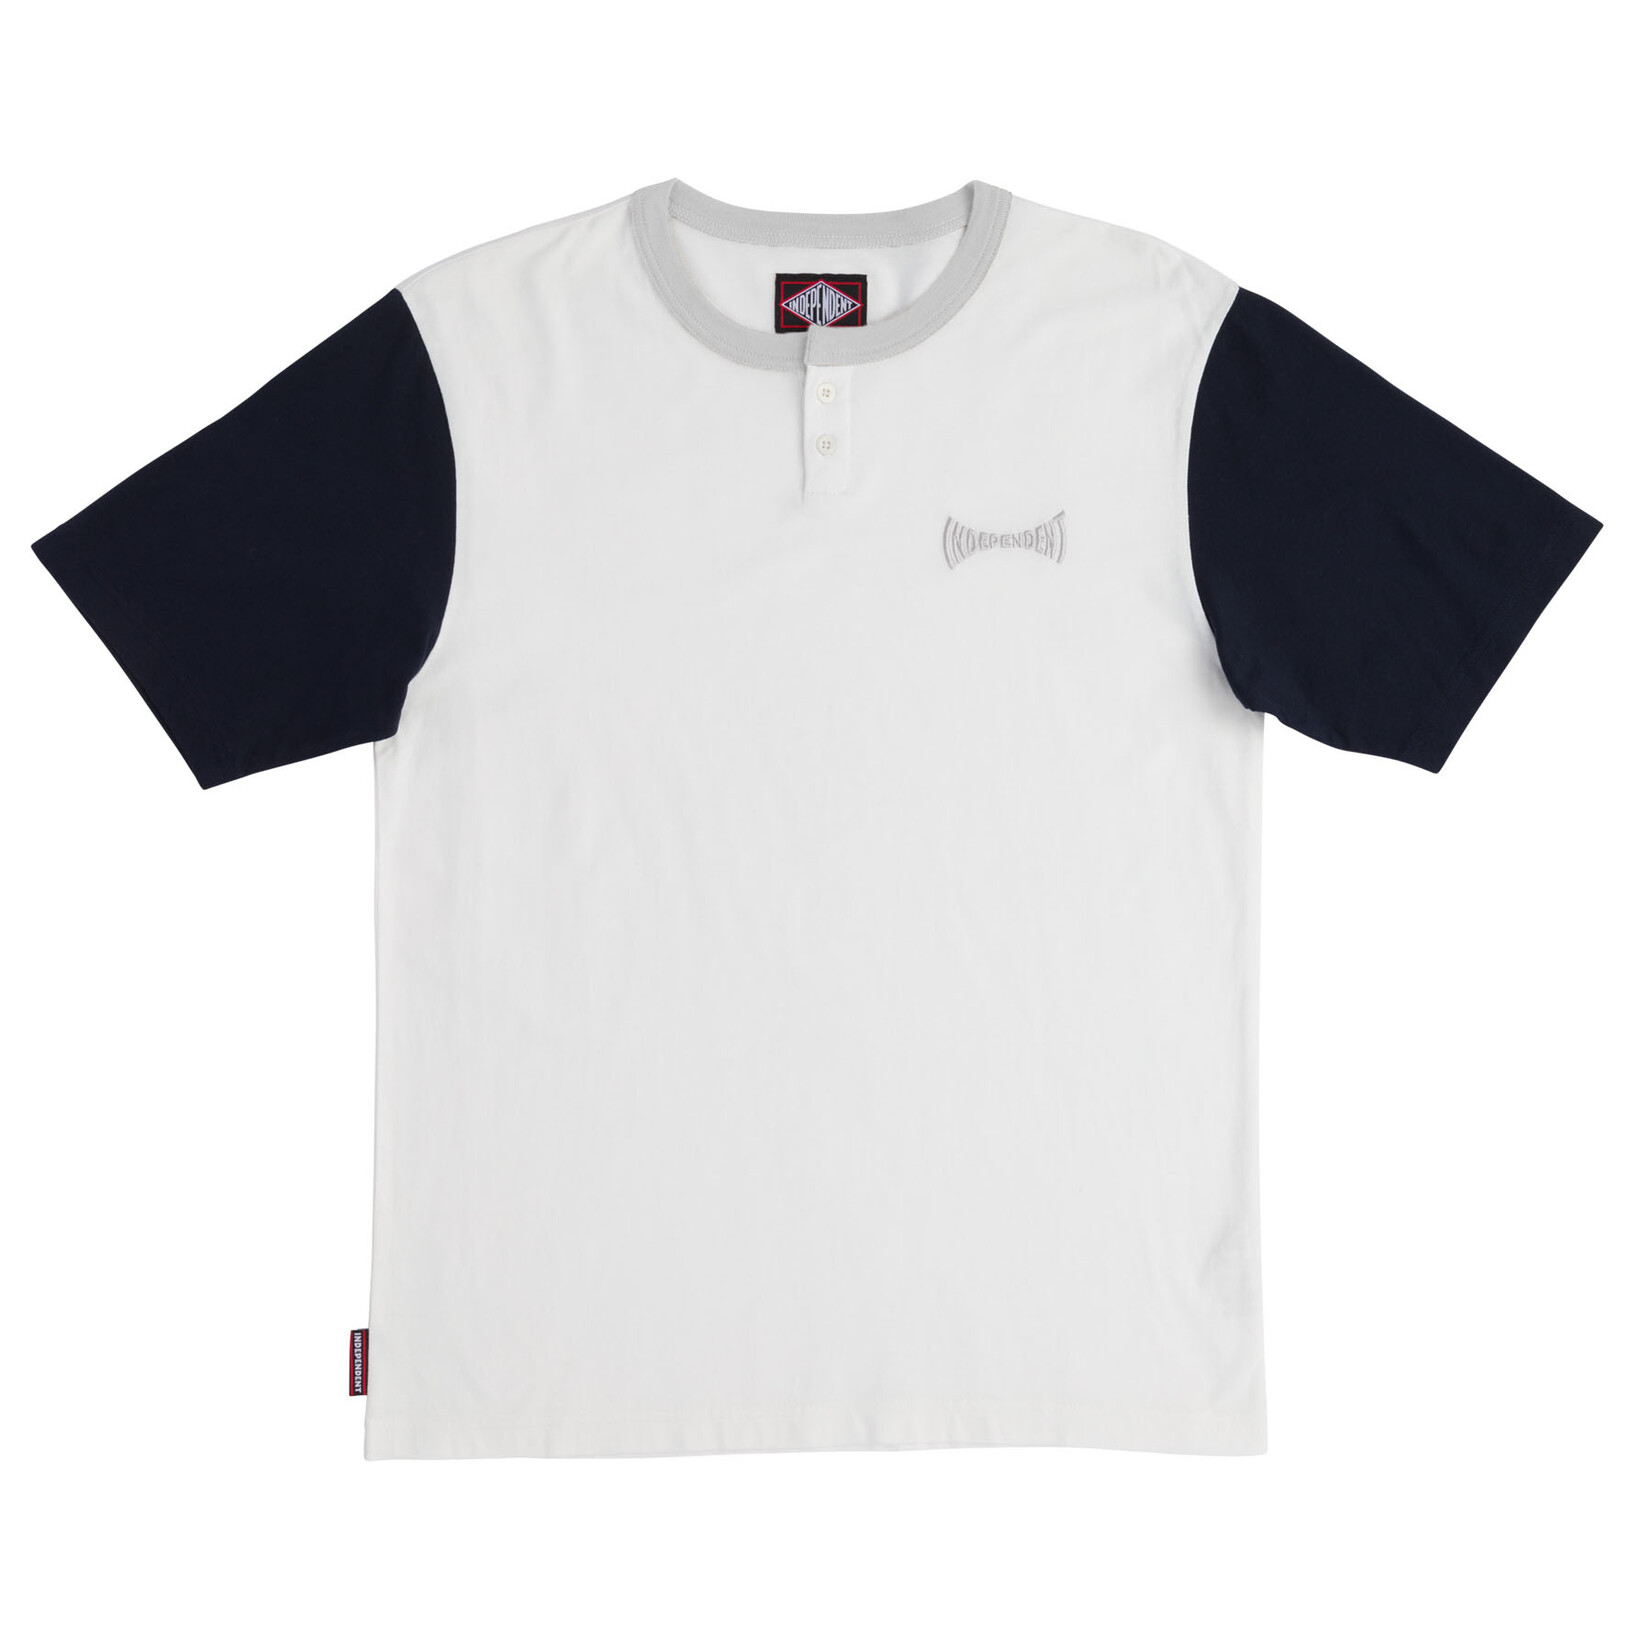 Independent Independent Spanning Henley T-Shirt - White/Navy/Grey -